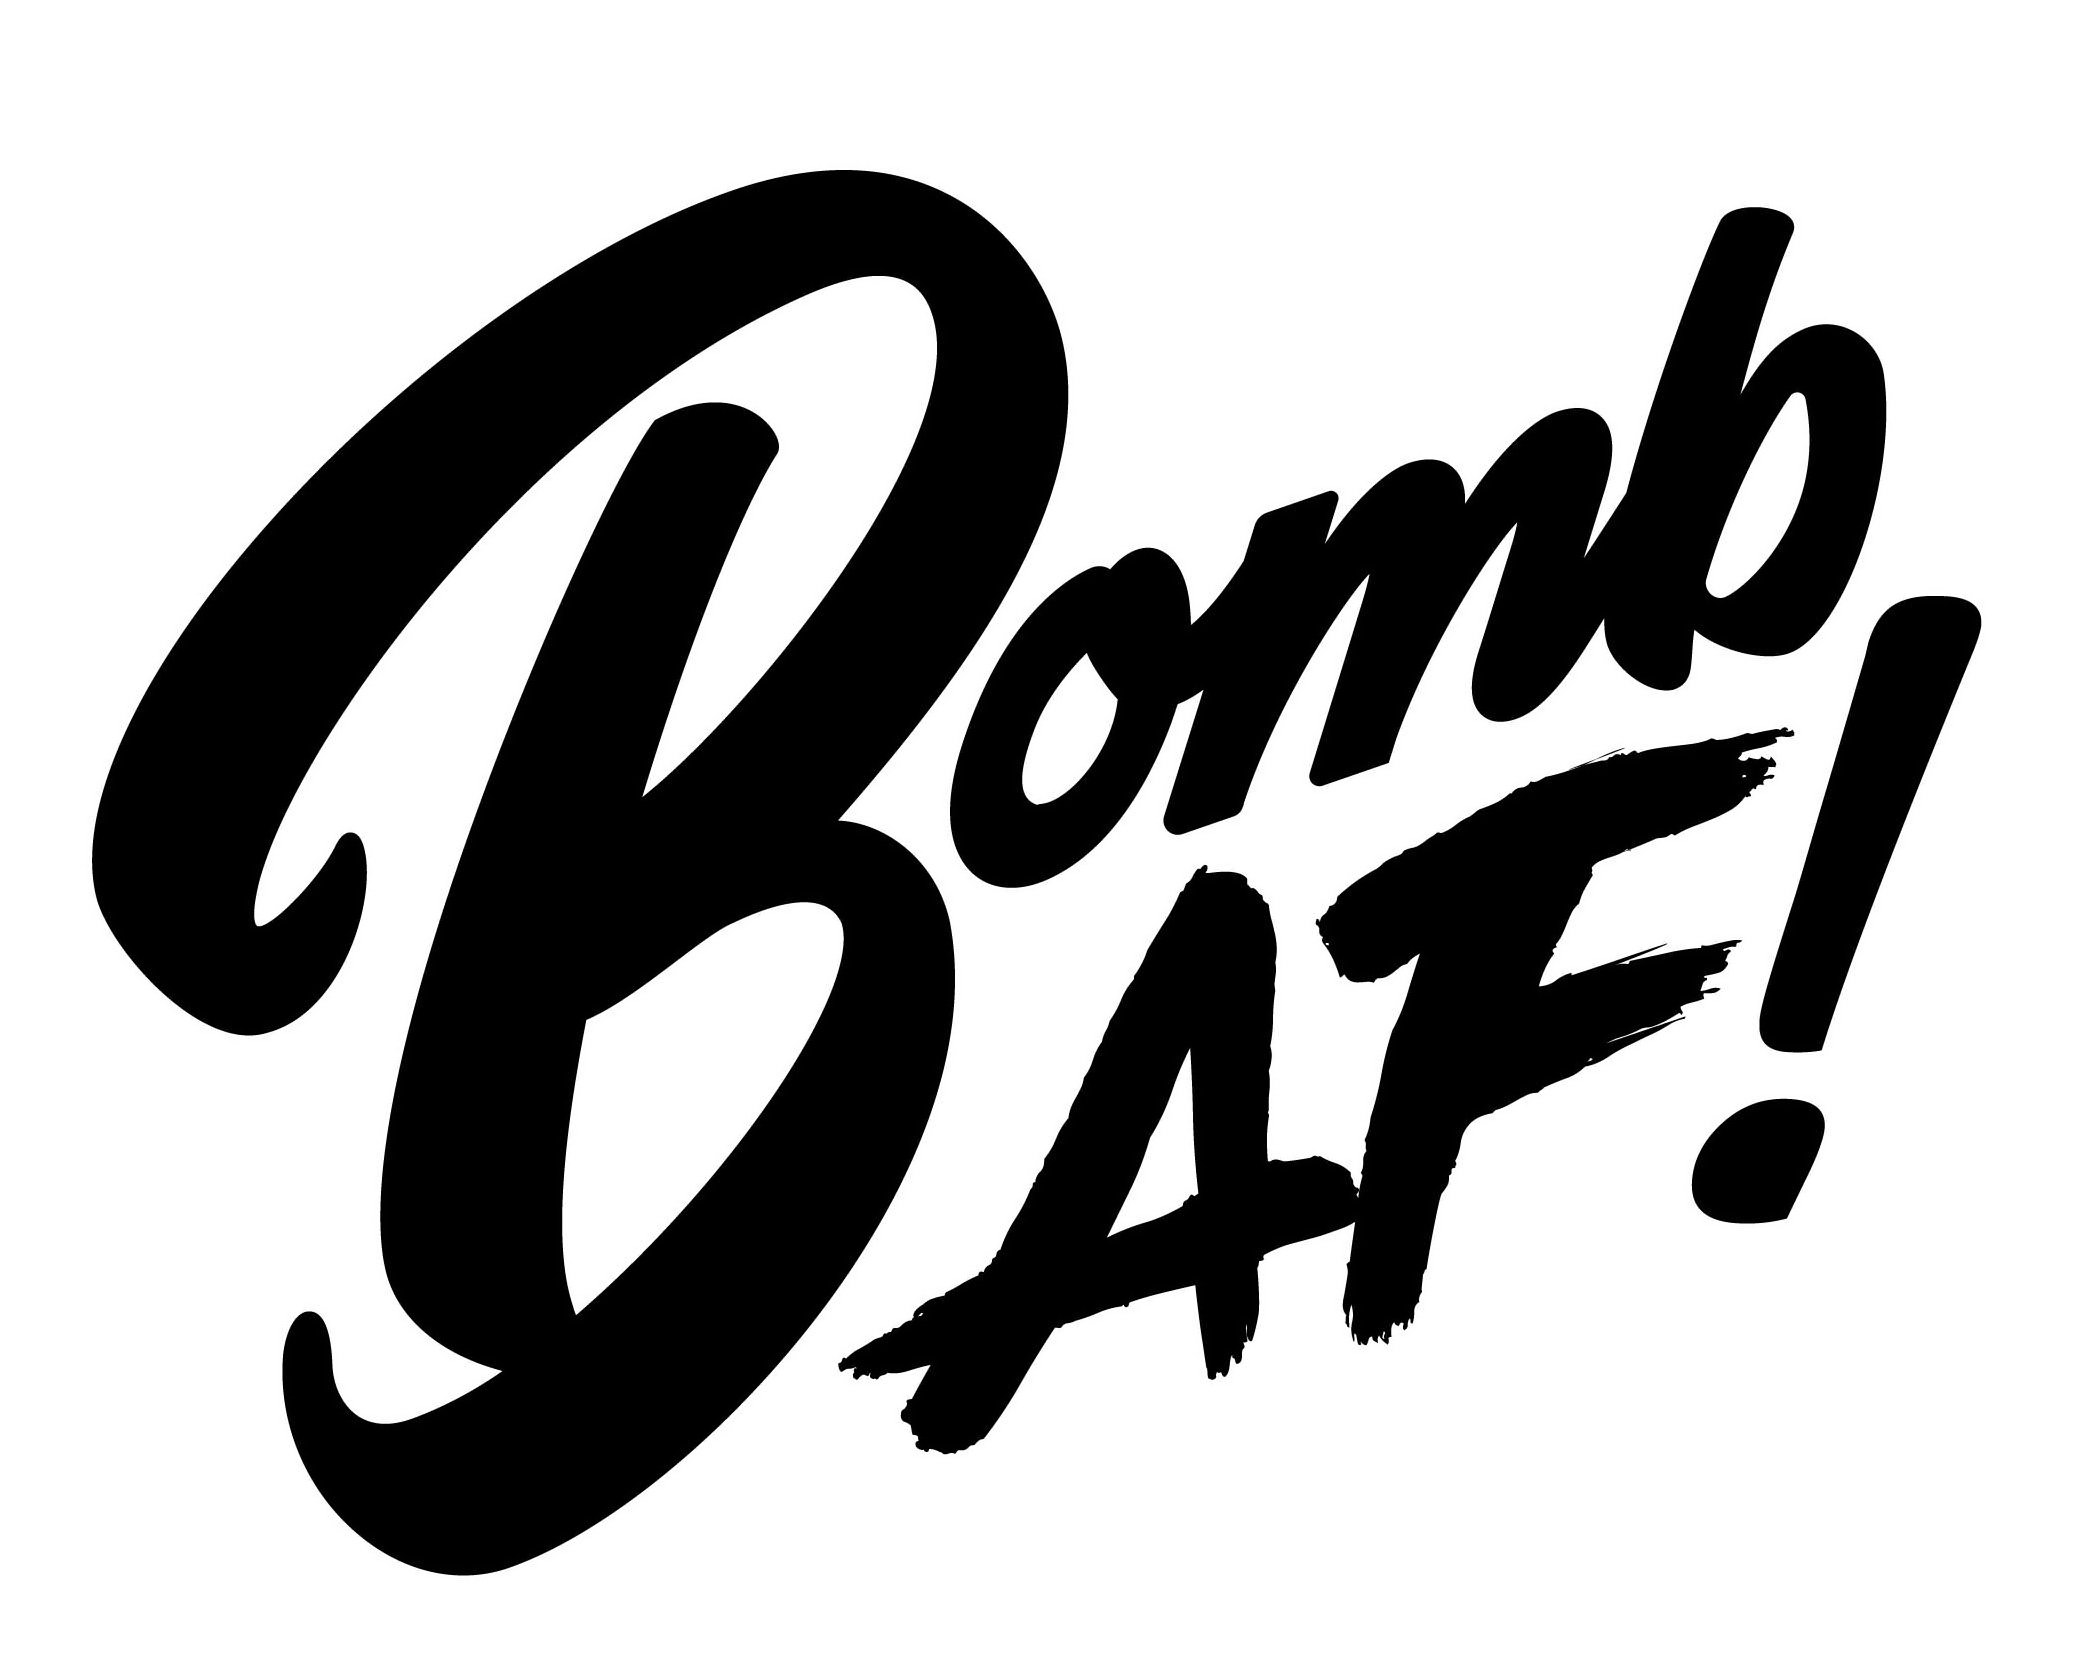 BOMB AF! - The Legaxy Project Inc. Trademark Registration